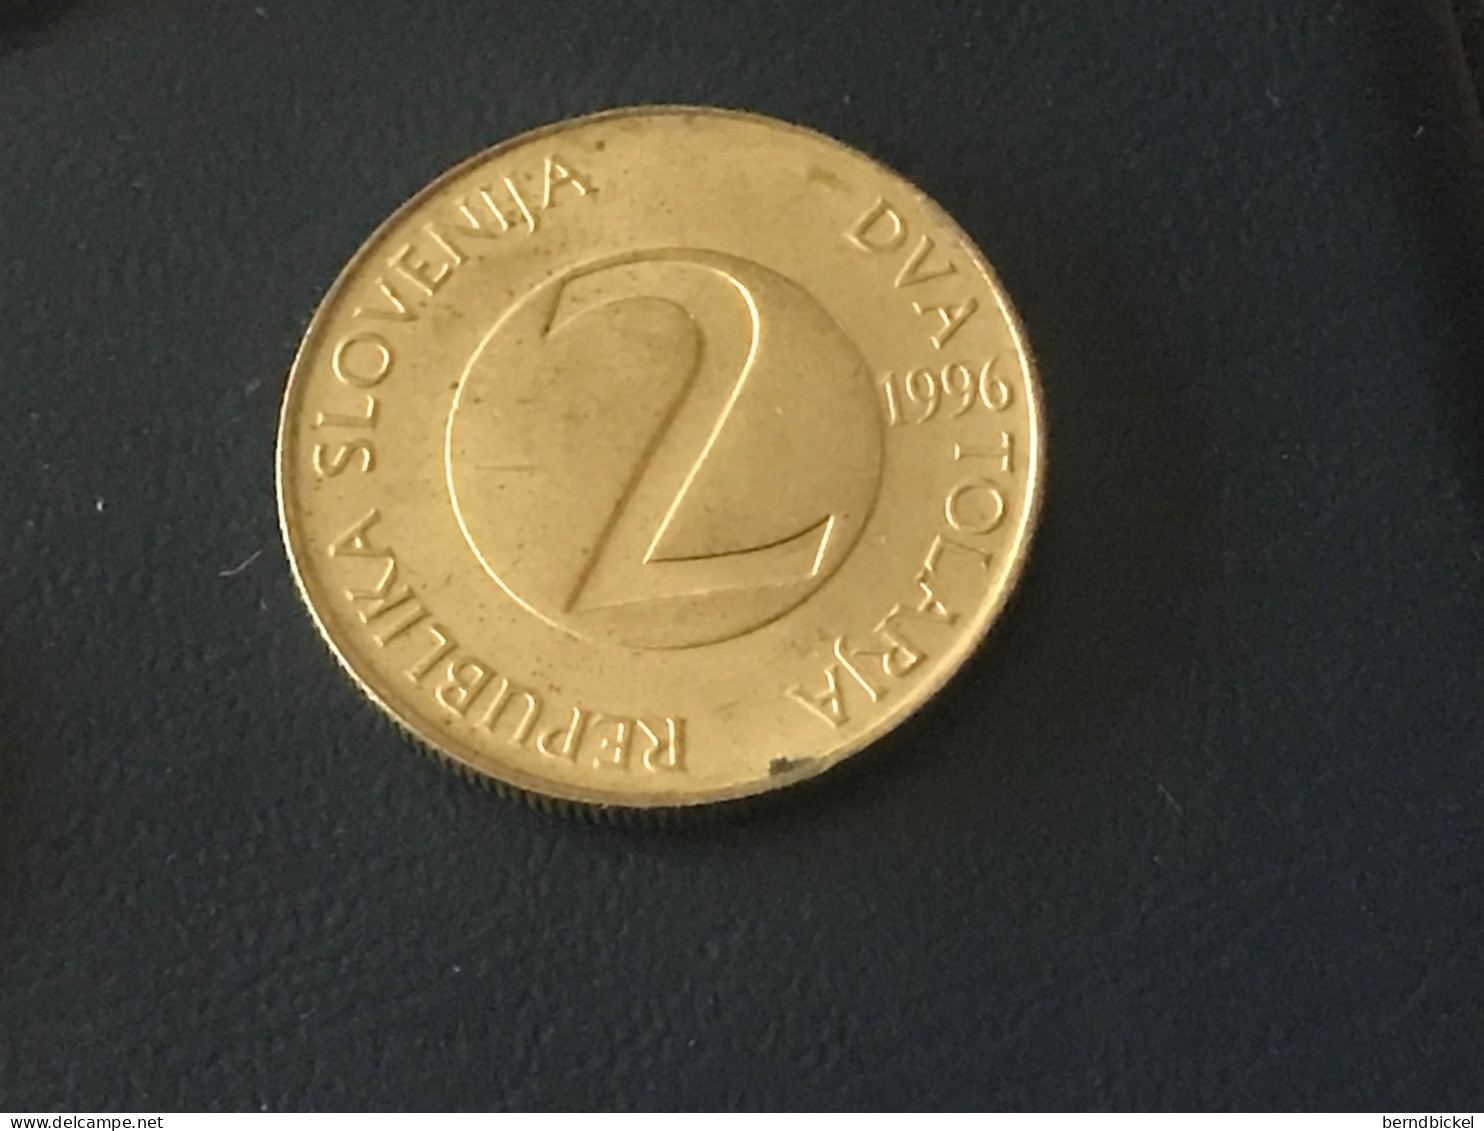 Münze Münzen Umlaufmünze Slowenien 2 Tolar 1996 - Slowenien